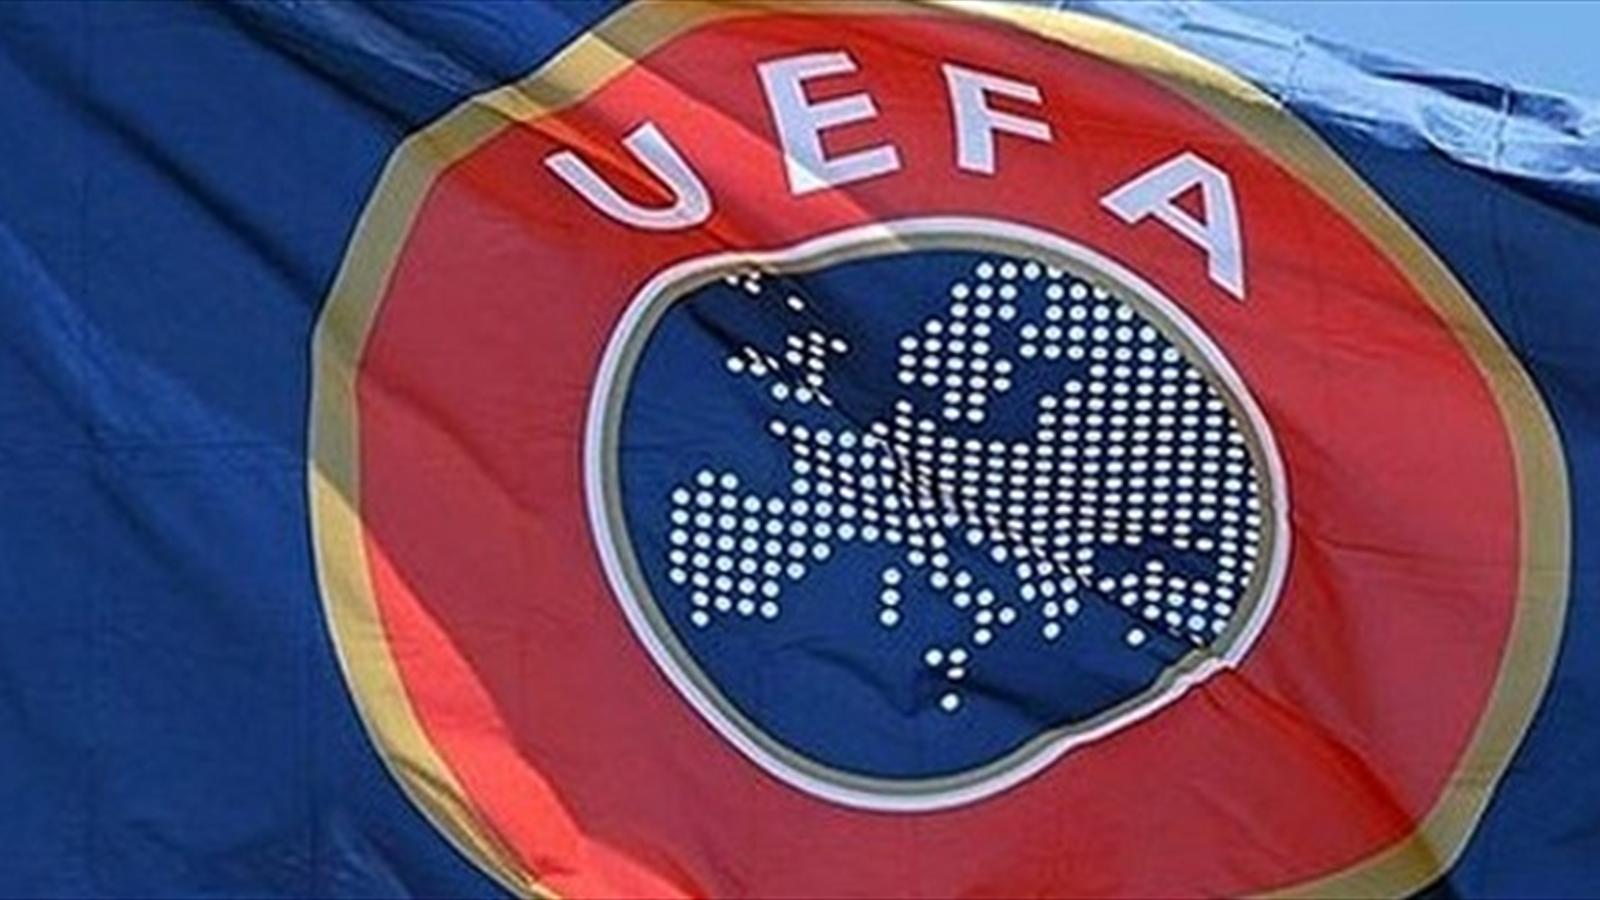 UEFA club sotto indagine: numerose le indagini anche sulle plusvalenze